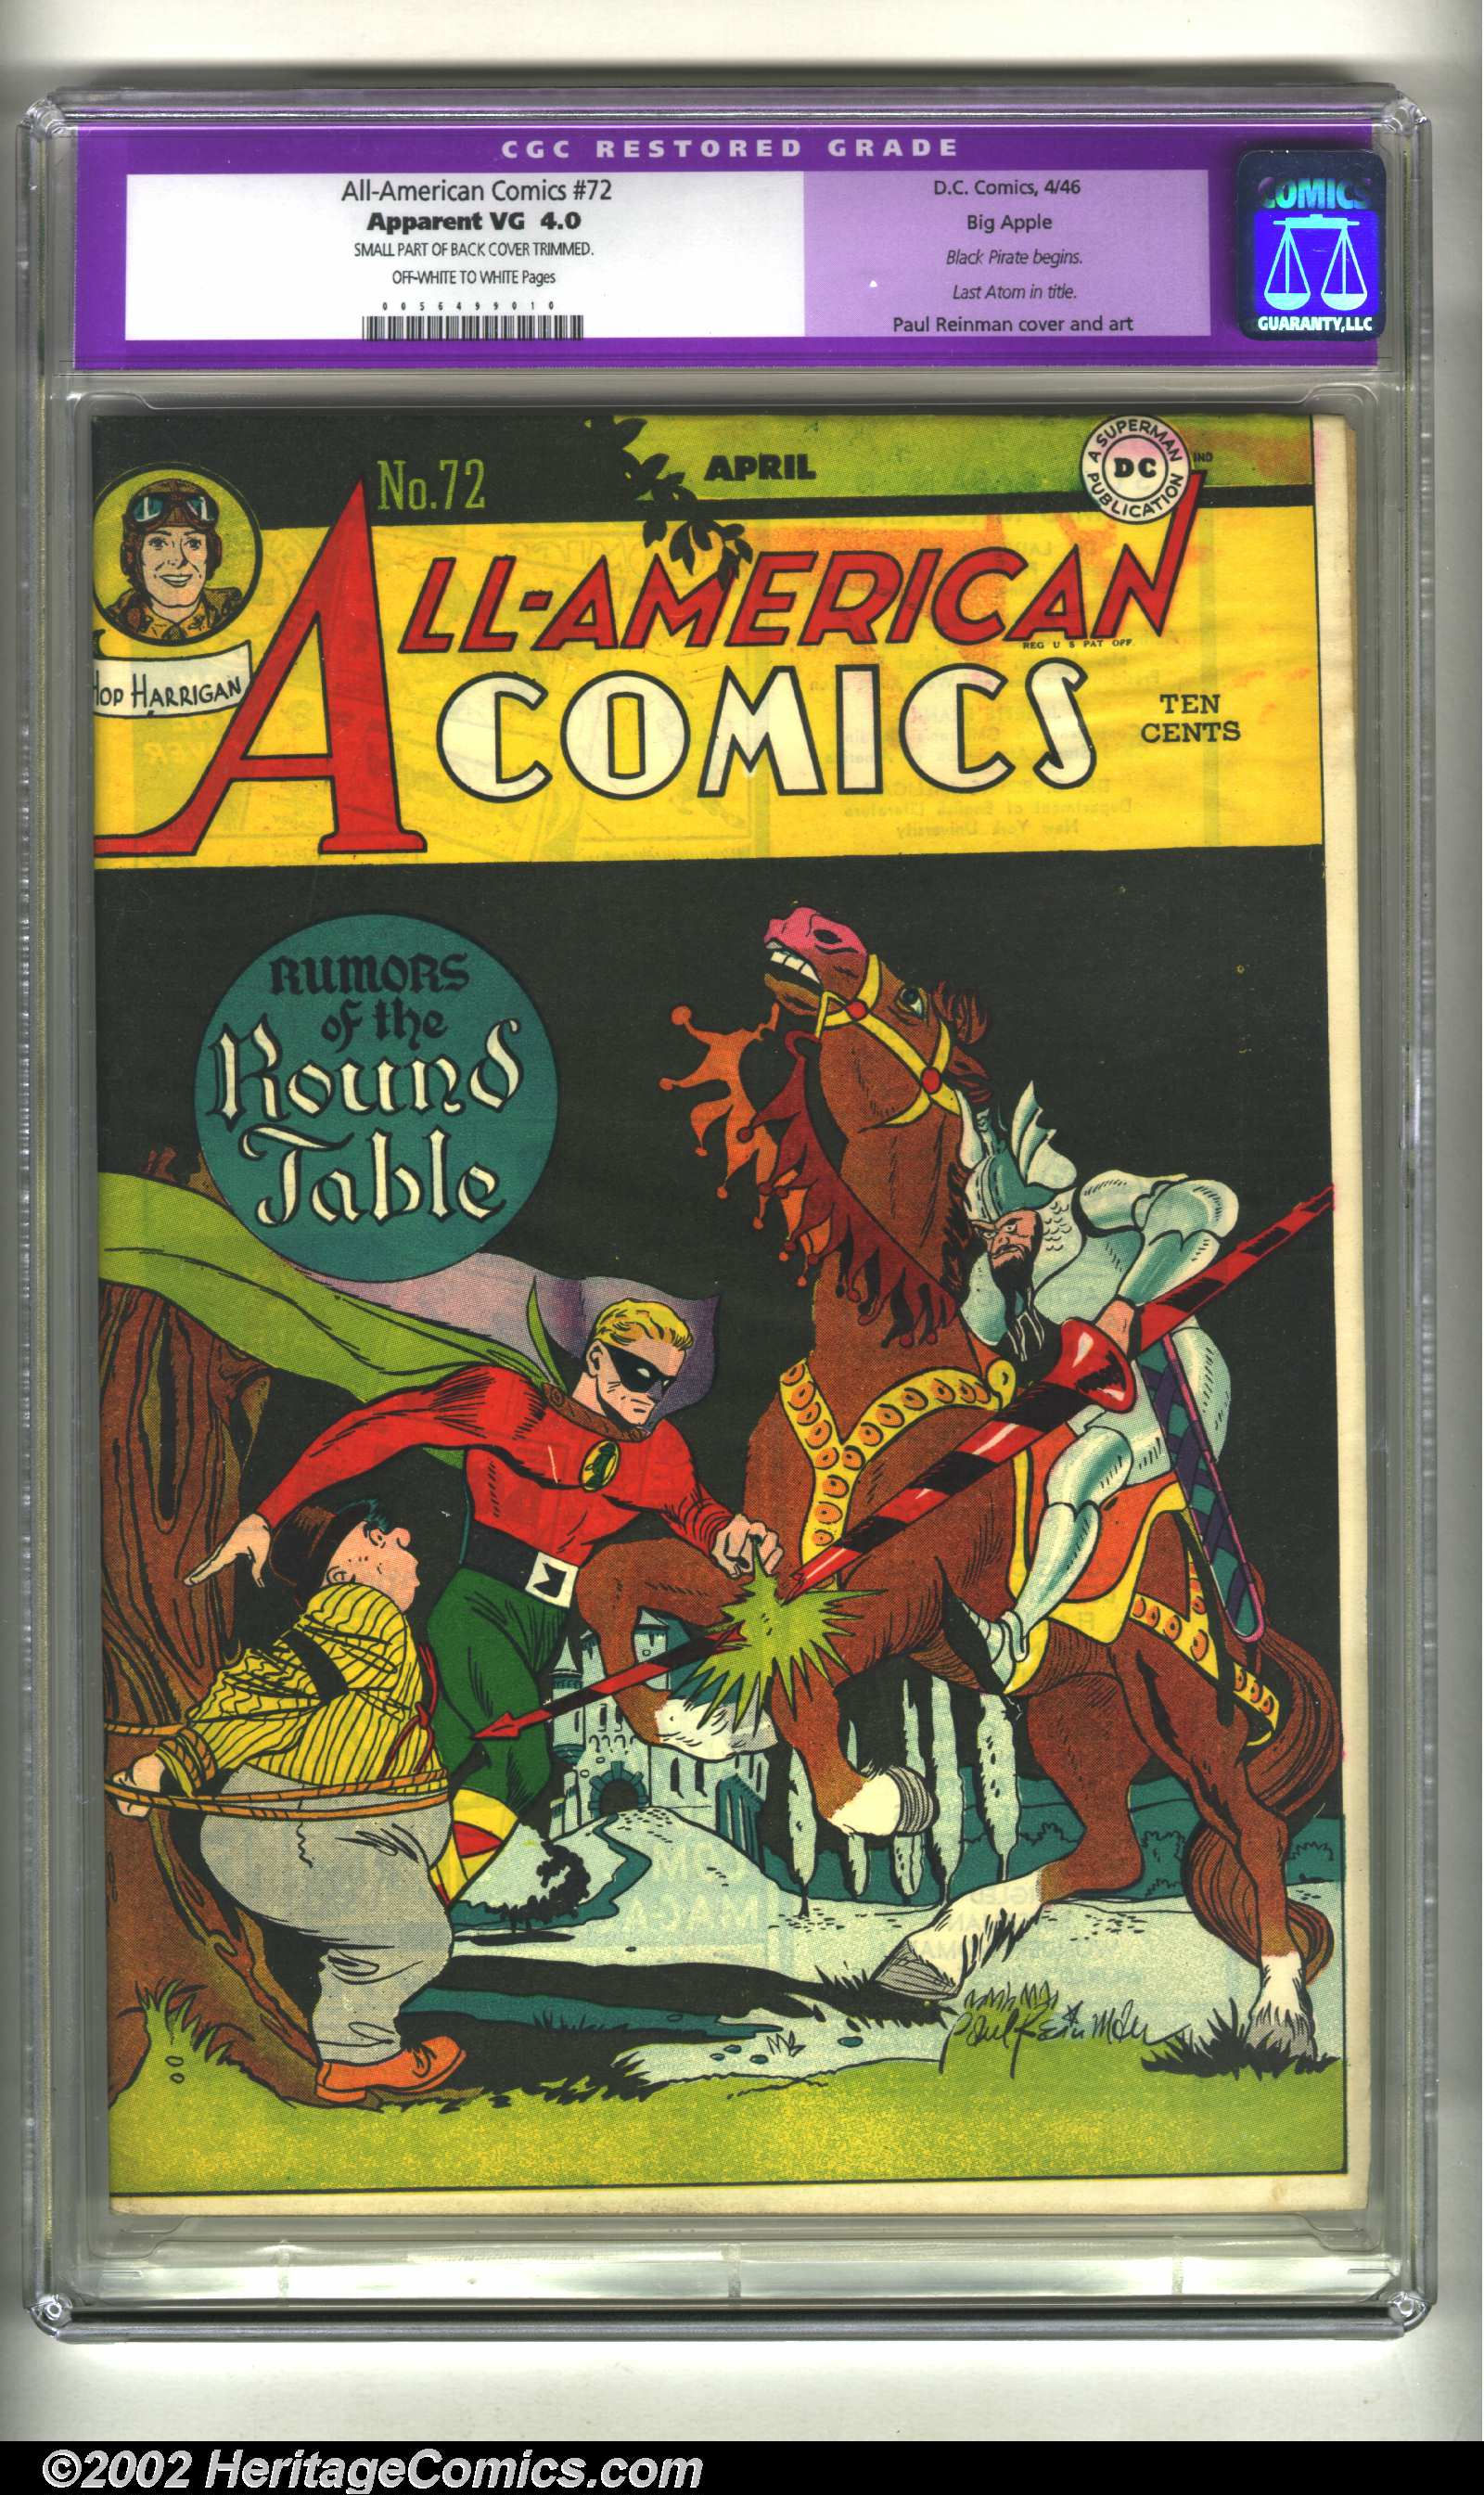 The Big All-american Comic Book #4